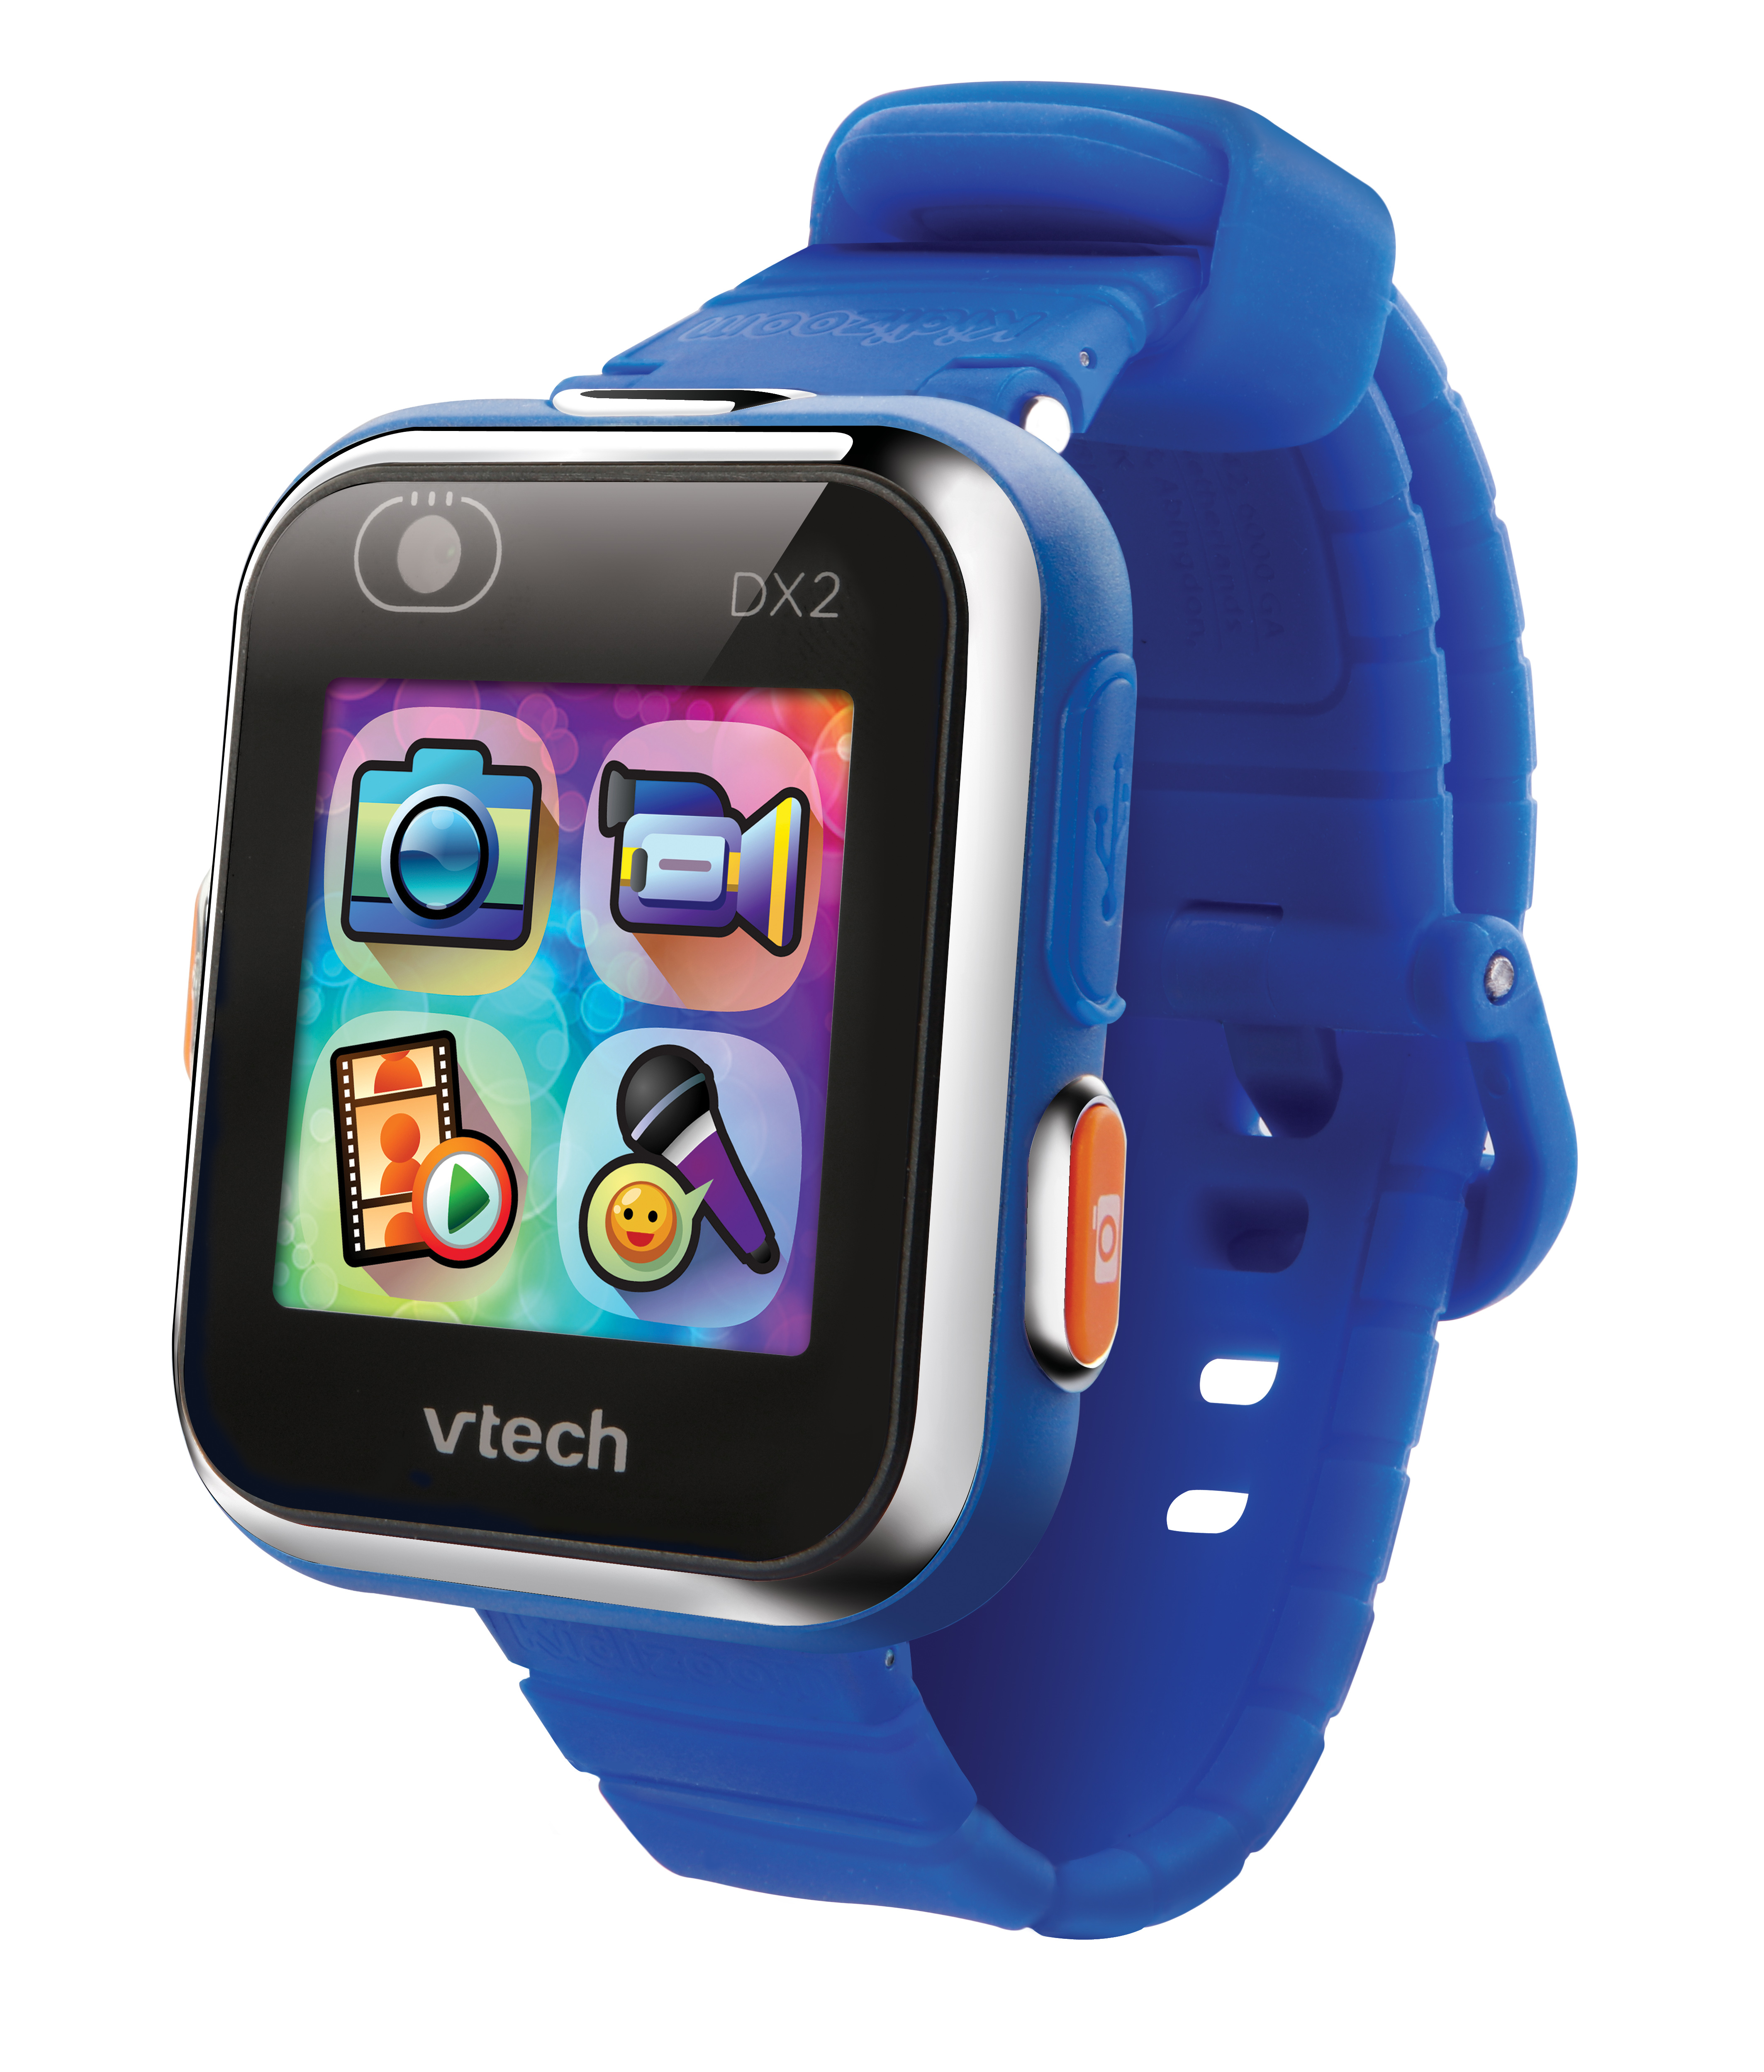 VTech Smartwatch DX2 blauw